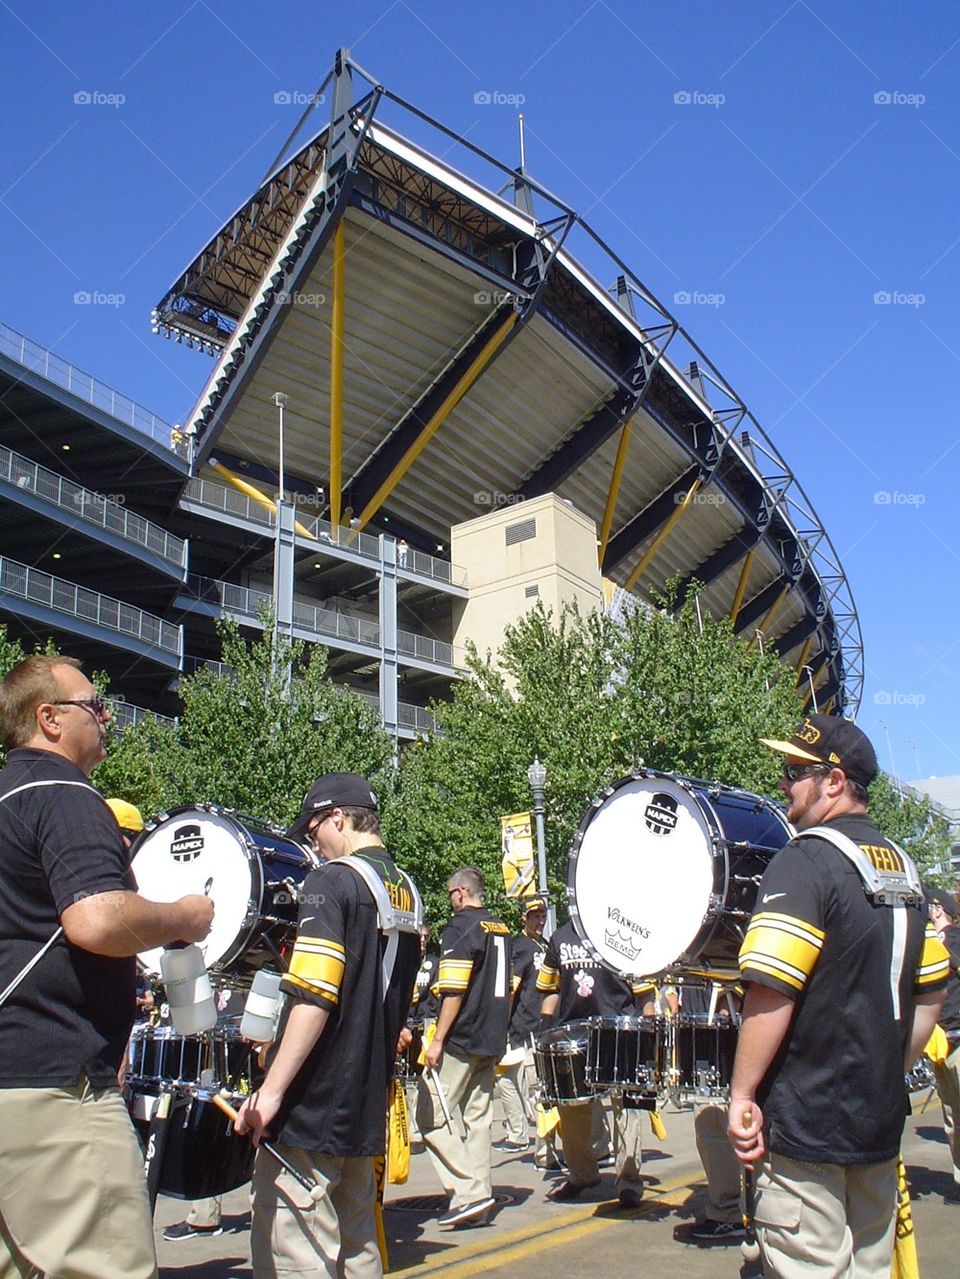 Steelers band